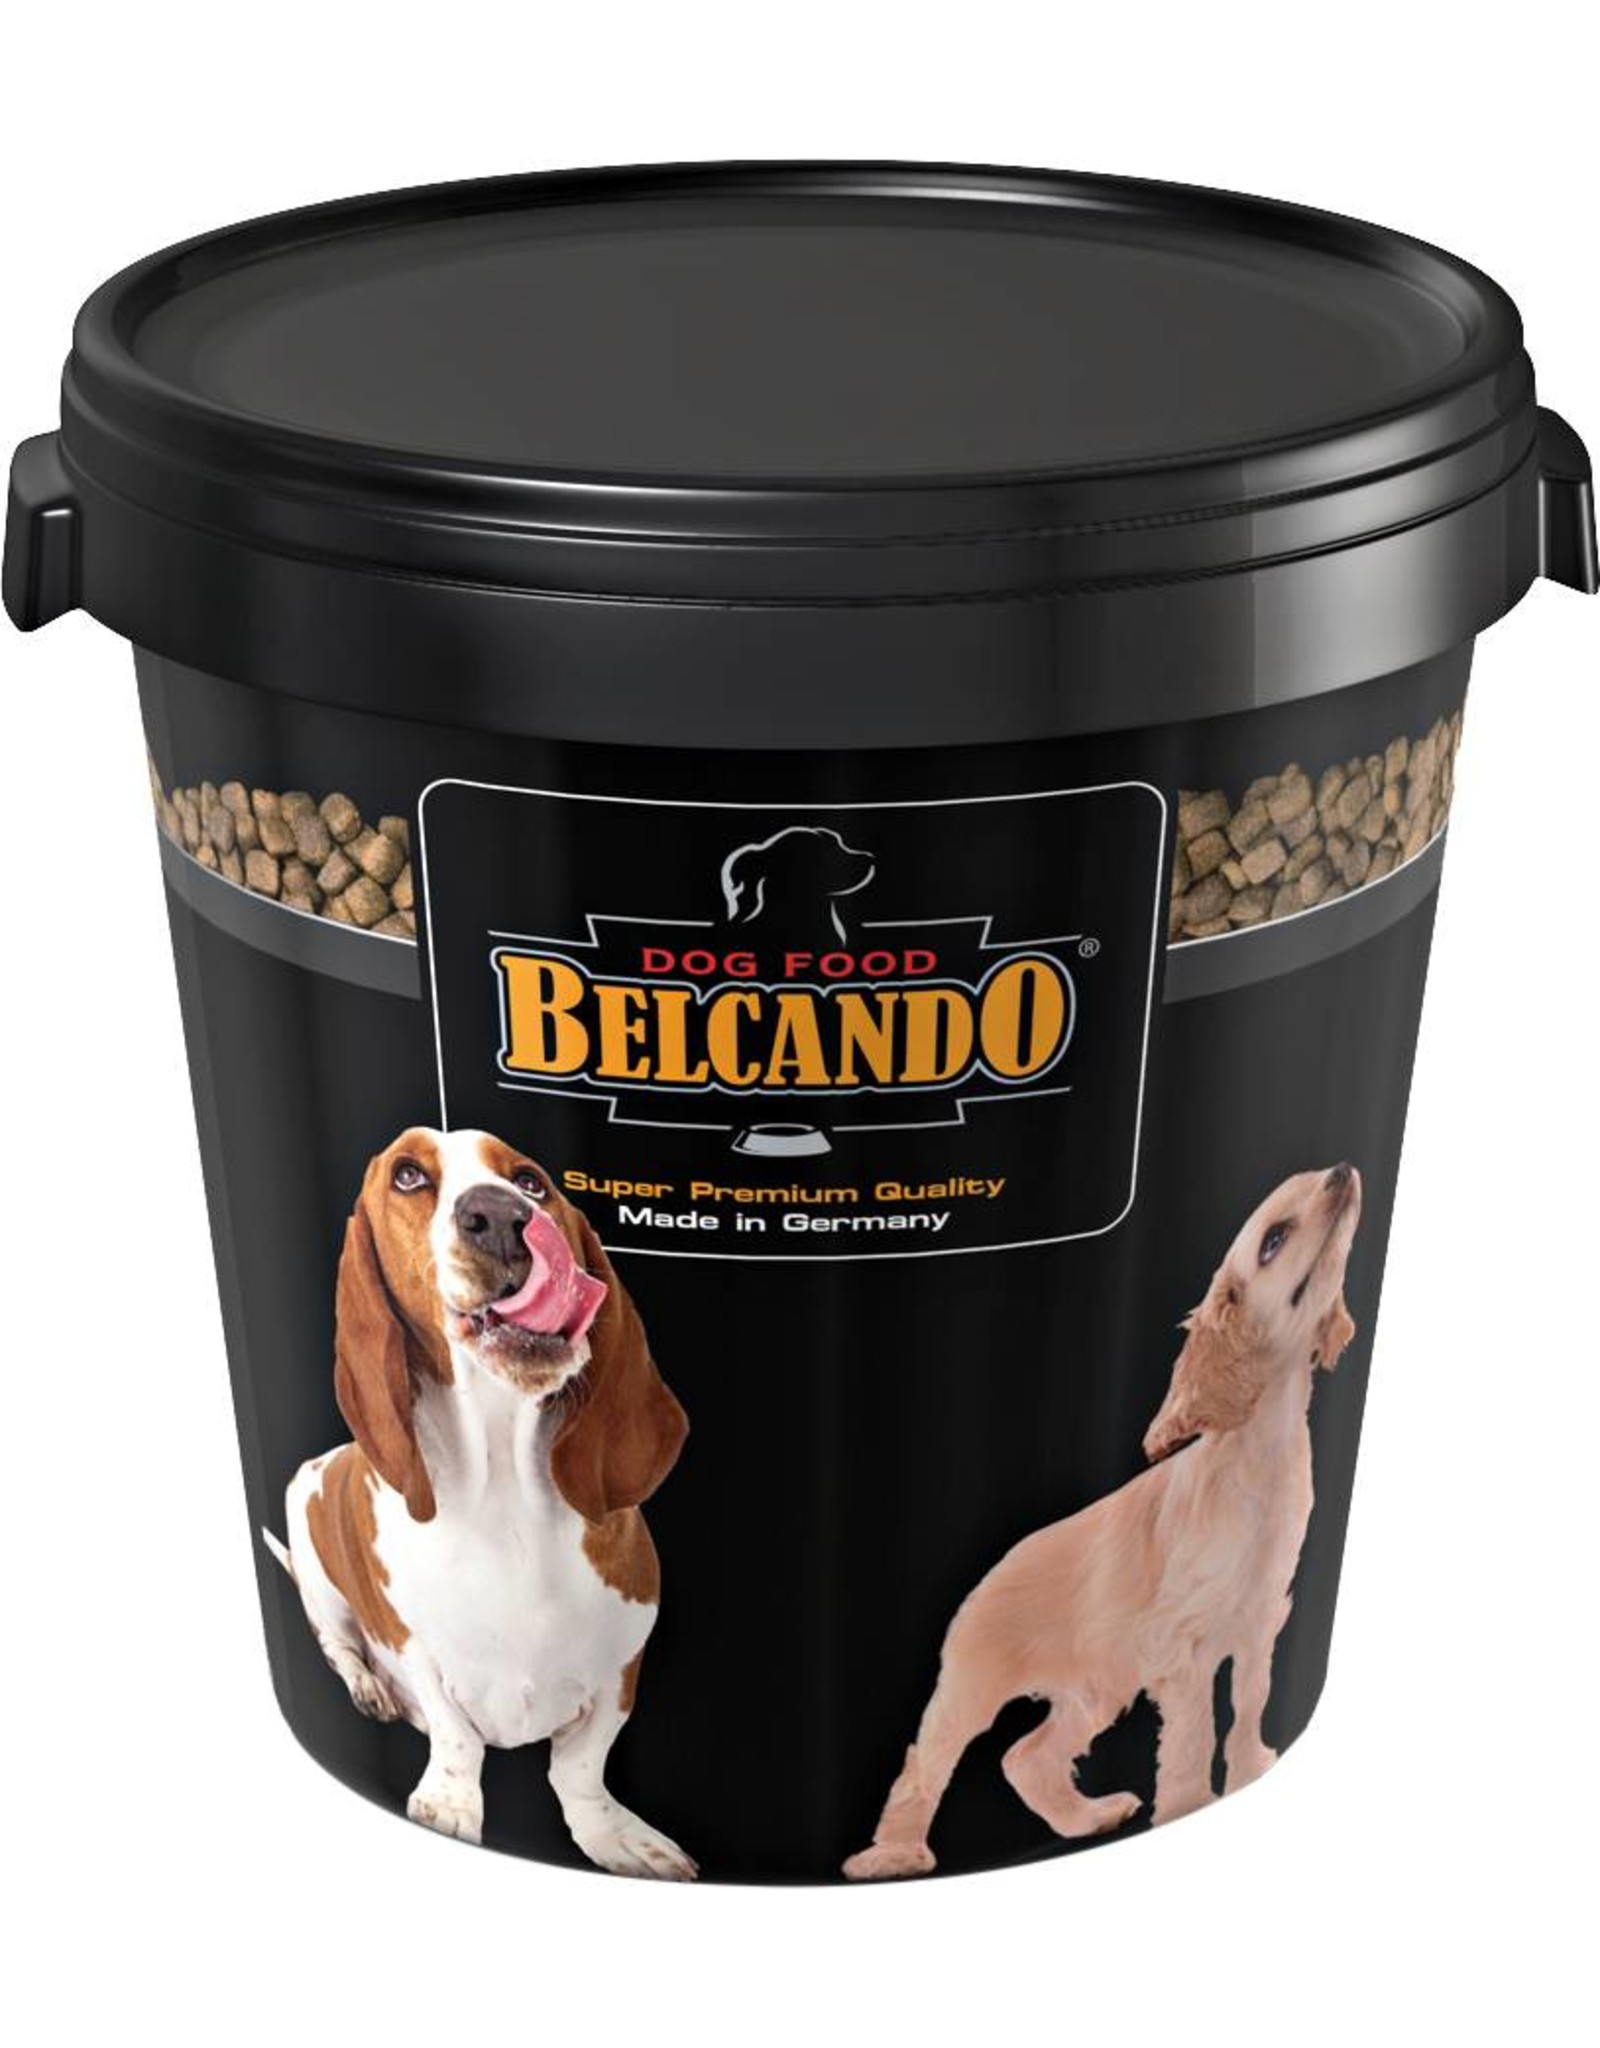 Корм для собаки доставка москва. Контейнер для сухого корма 12 кг. Belcando. Belcando корм. Контейнер для сухого корма Pro Plan.